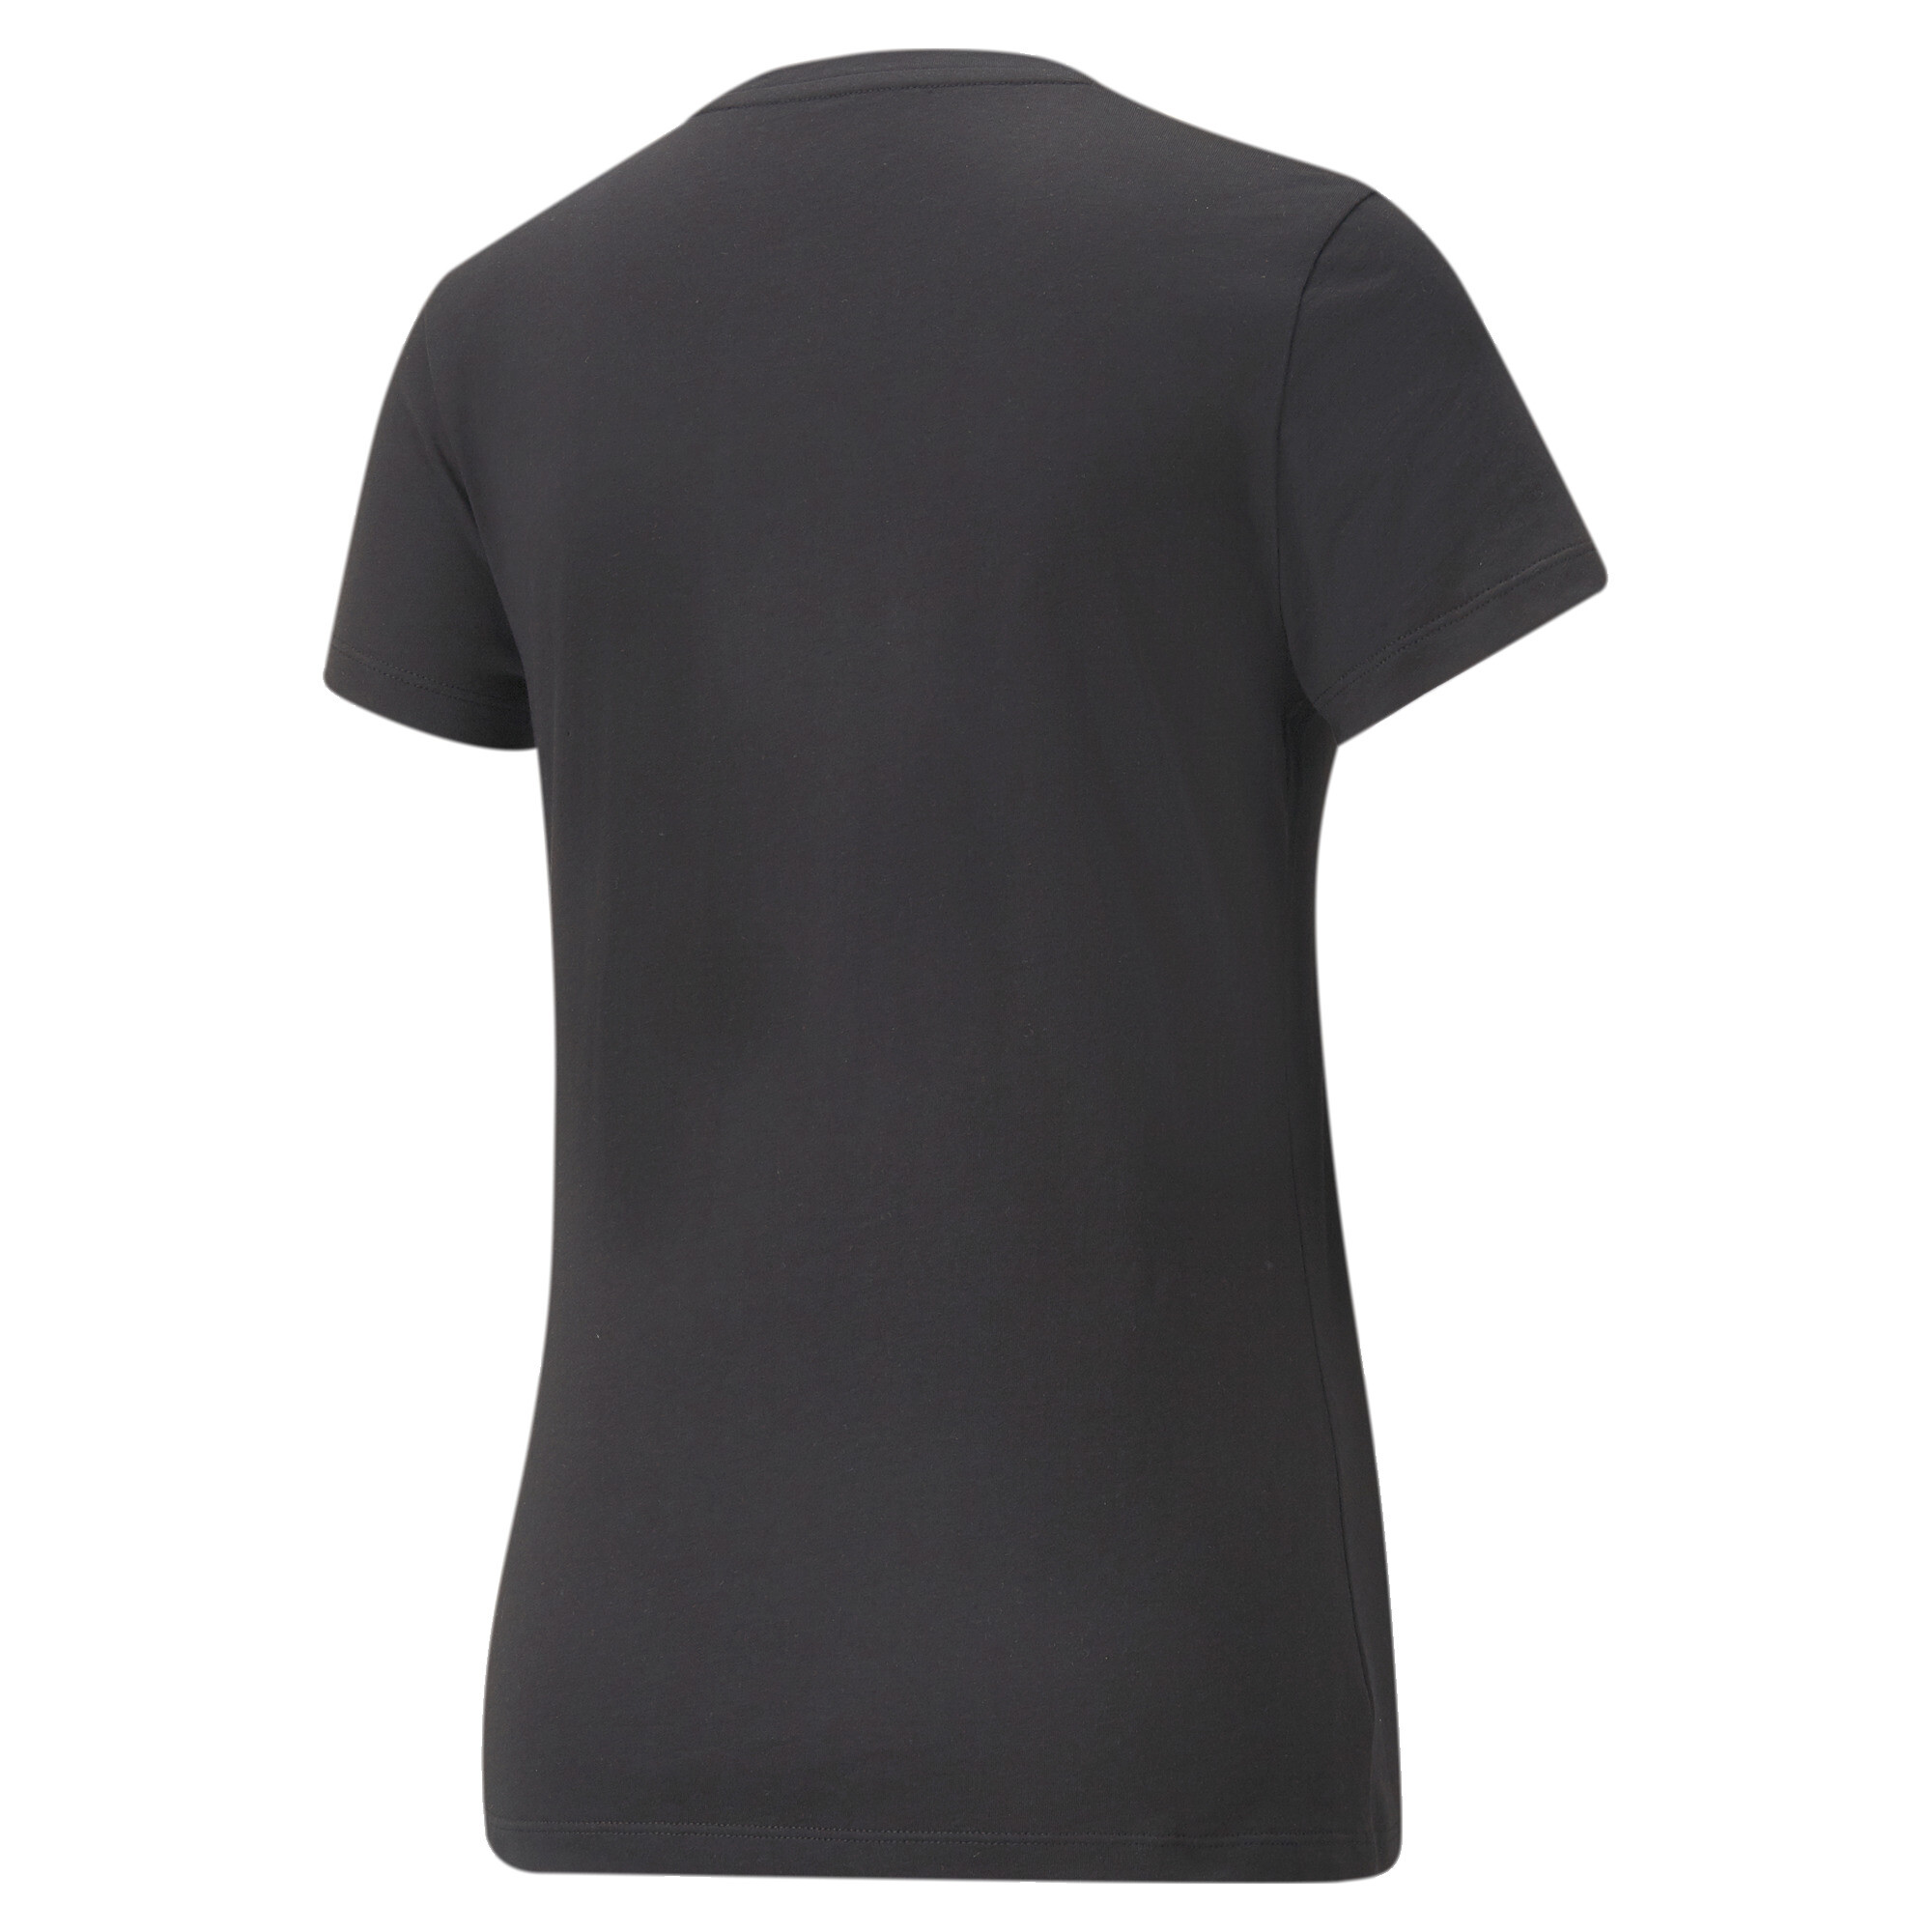 Women's PUMA Essentials+ Metallic Logo T-Shirt In Black/Gold, Size Large